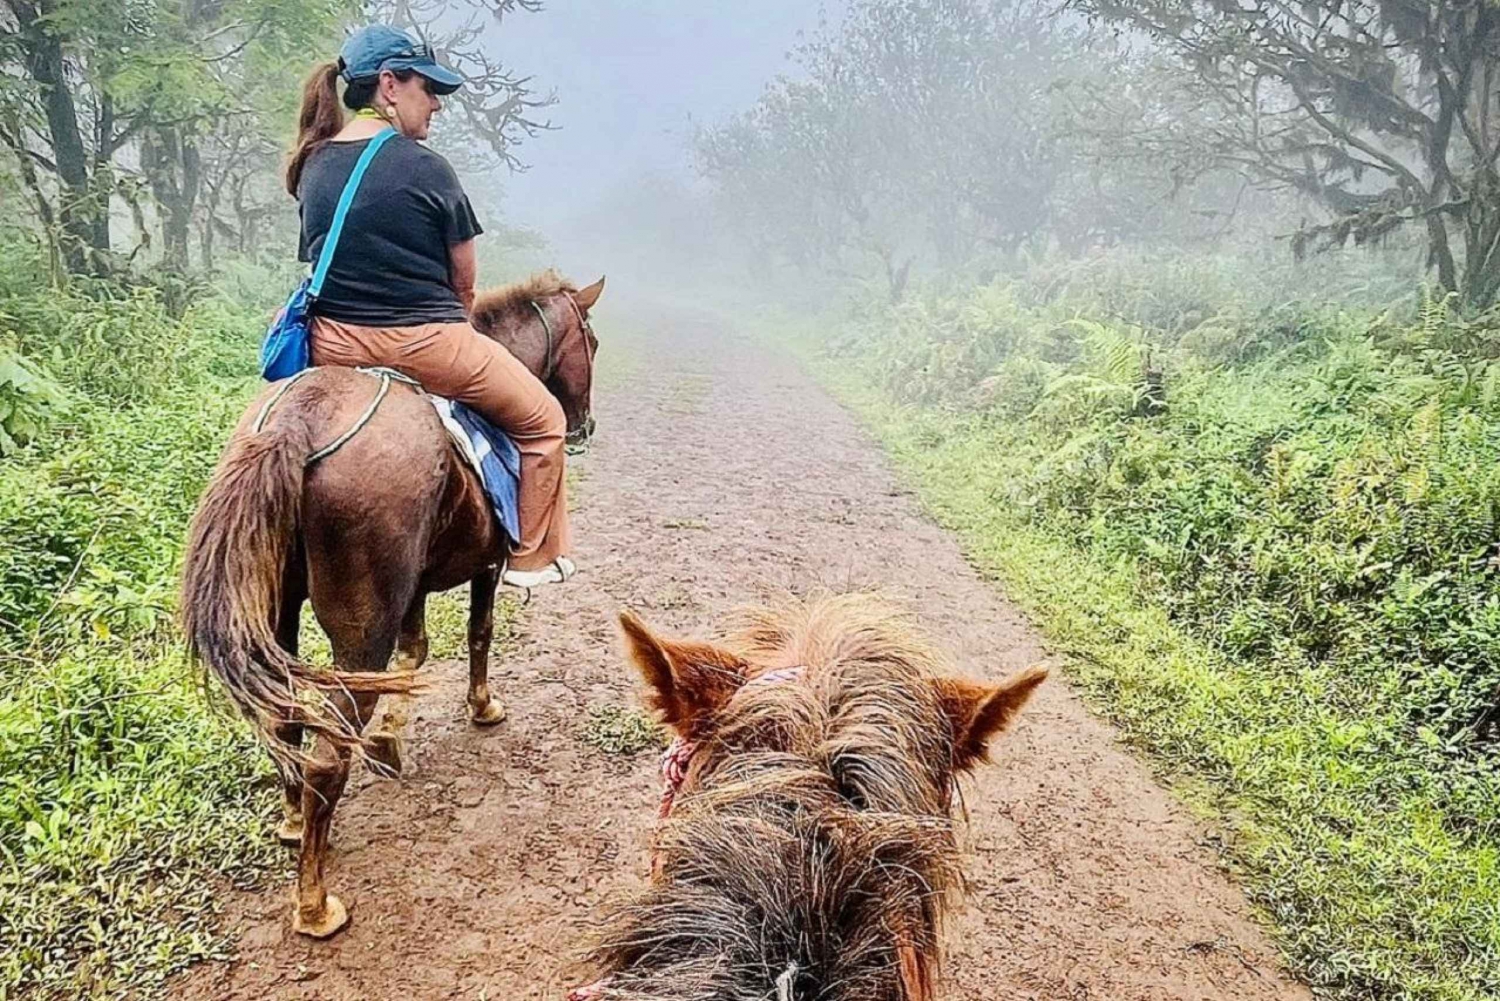 Galapagos horse riding the ridges of Sierra Negra Volcano